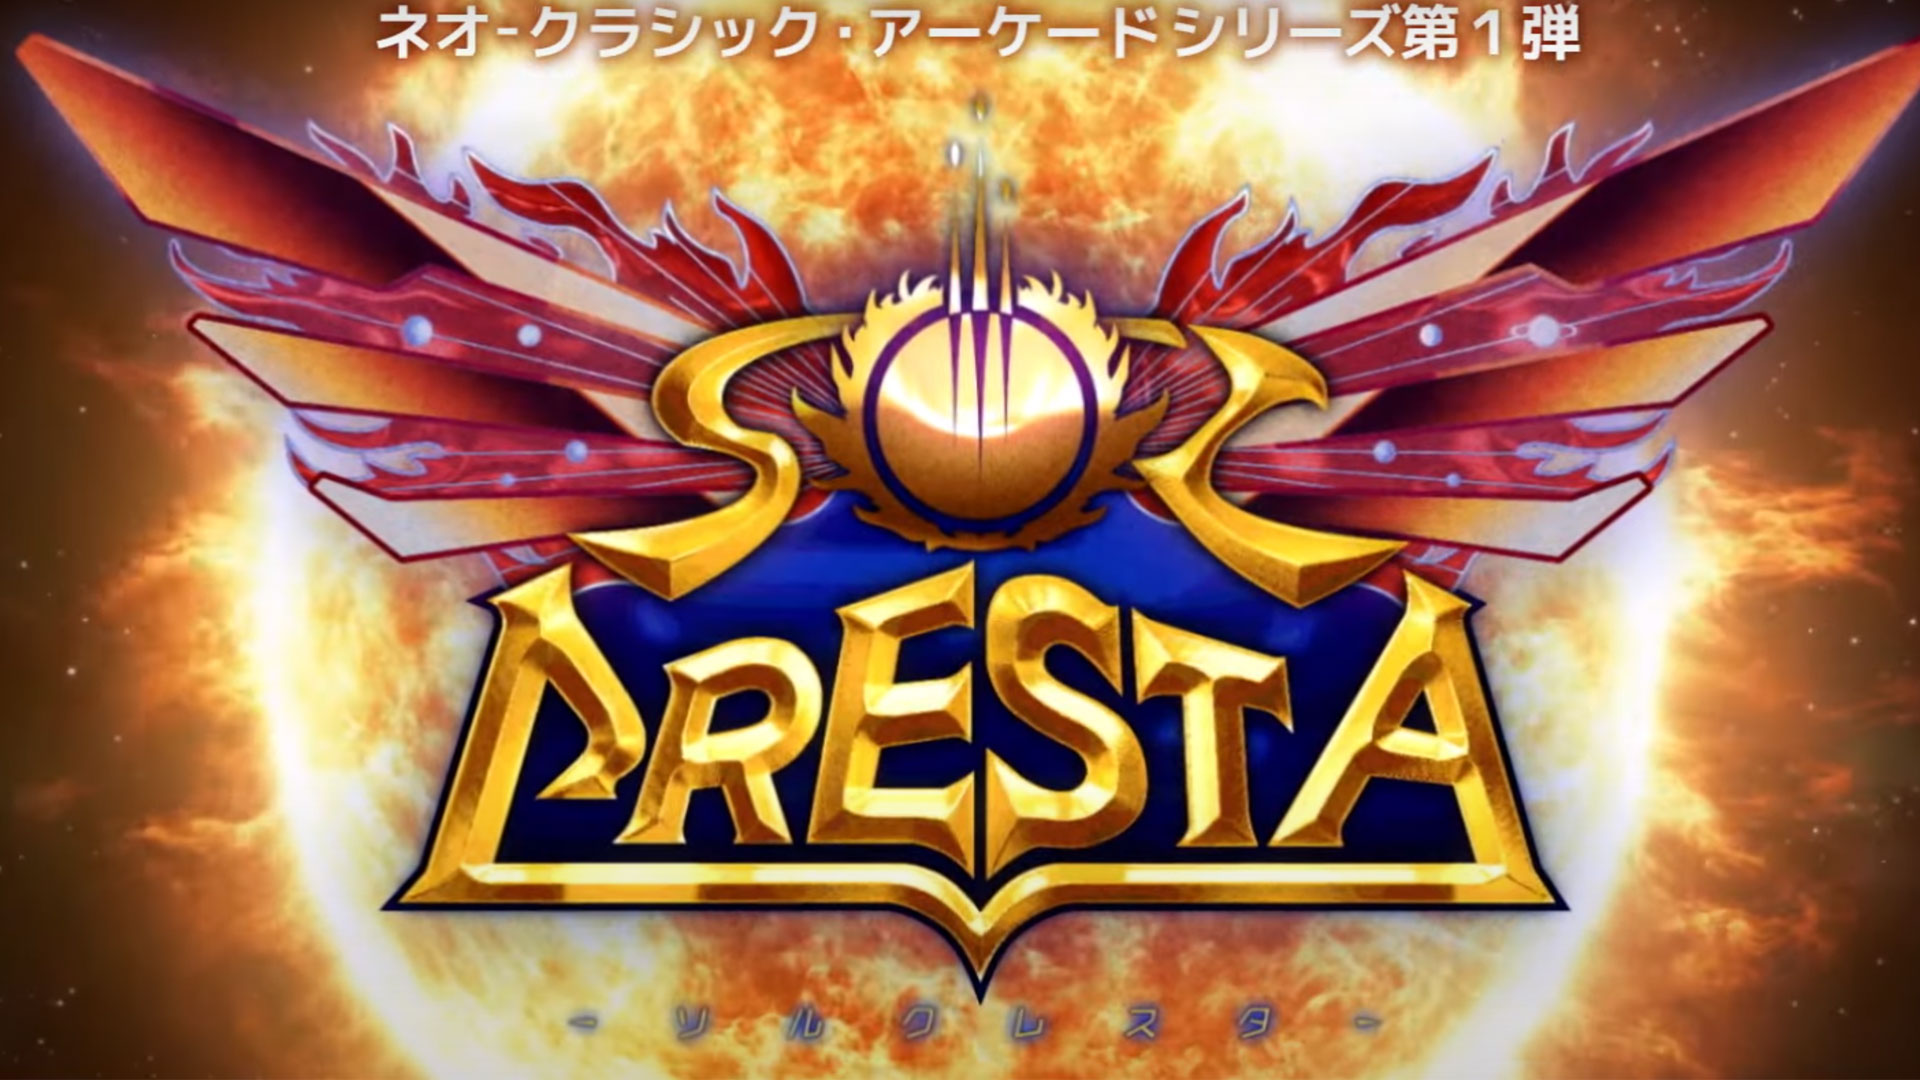 Sol Cresta ، بازی جدید استودیو پلاتینیوم گیمز معرفی شد